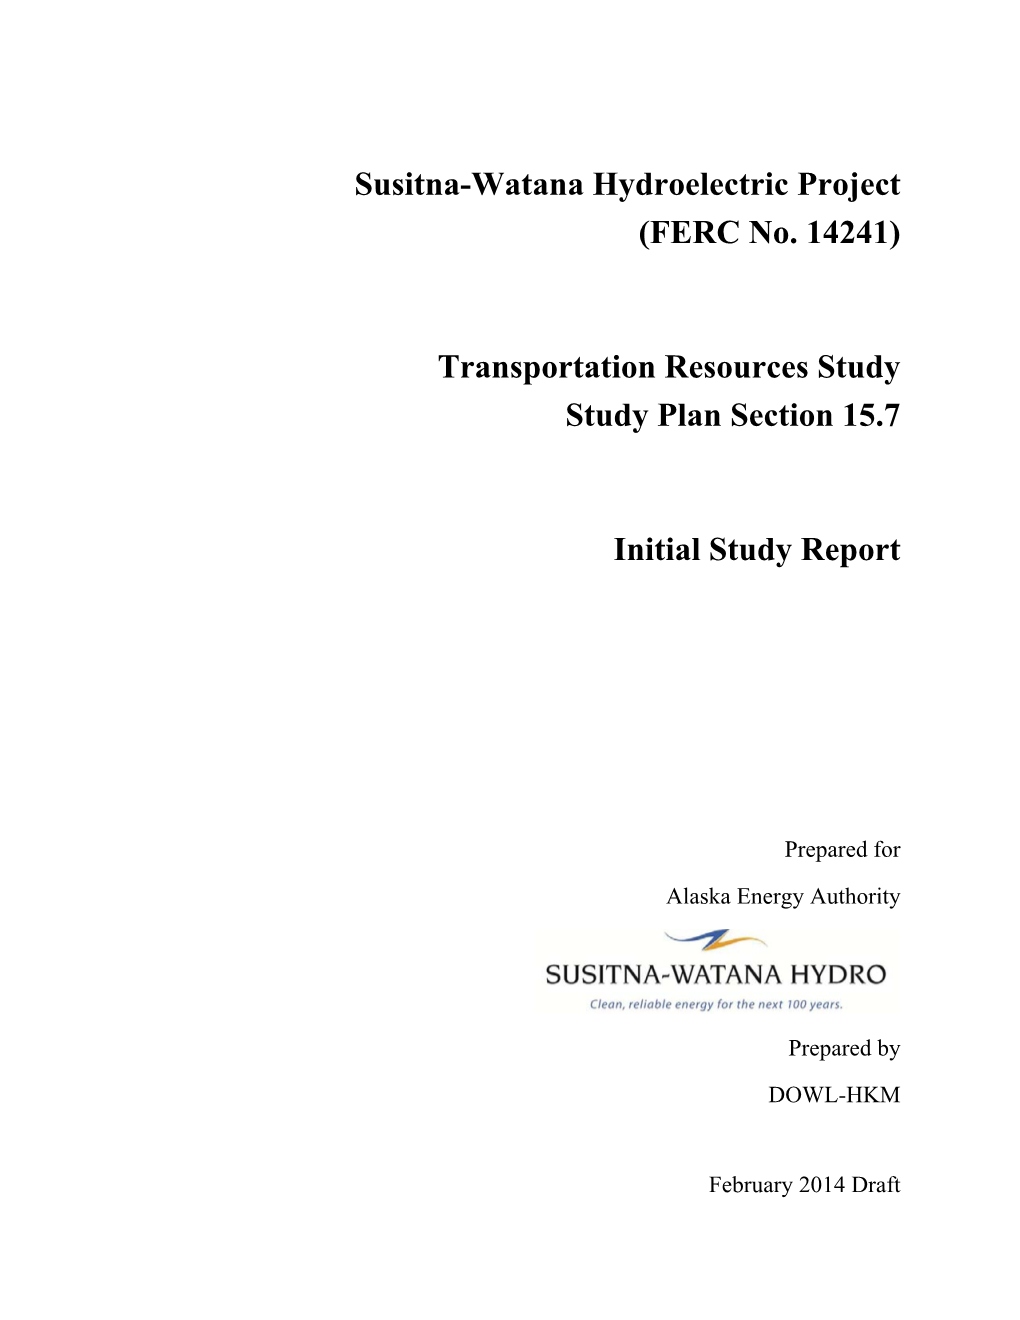 Susitna-Watana Hydroelectric Project (FERC No. 14241) Transportation